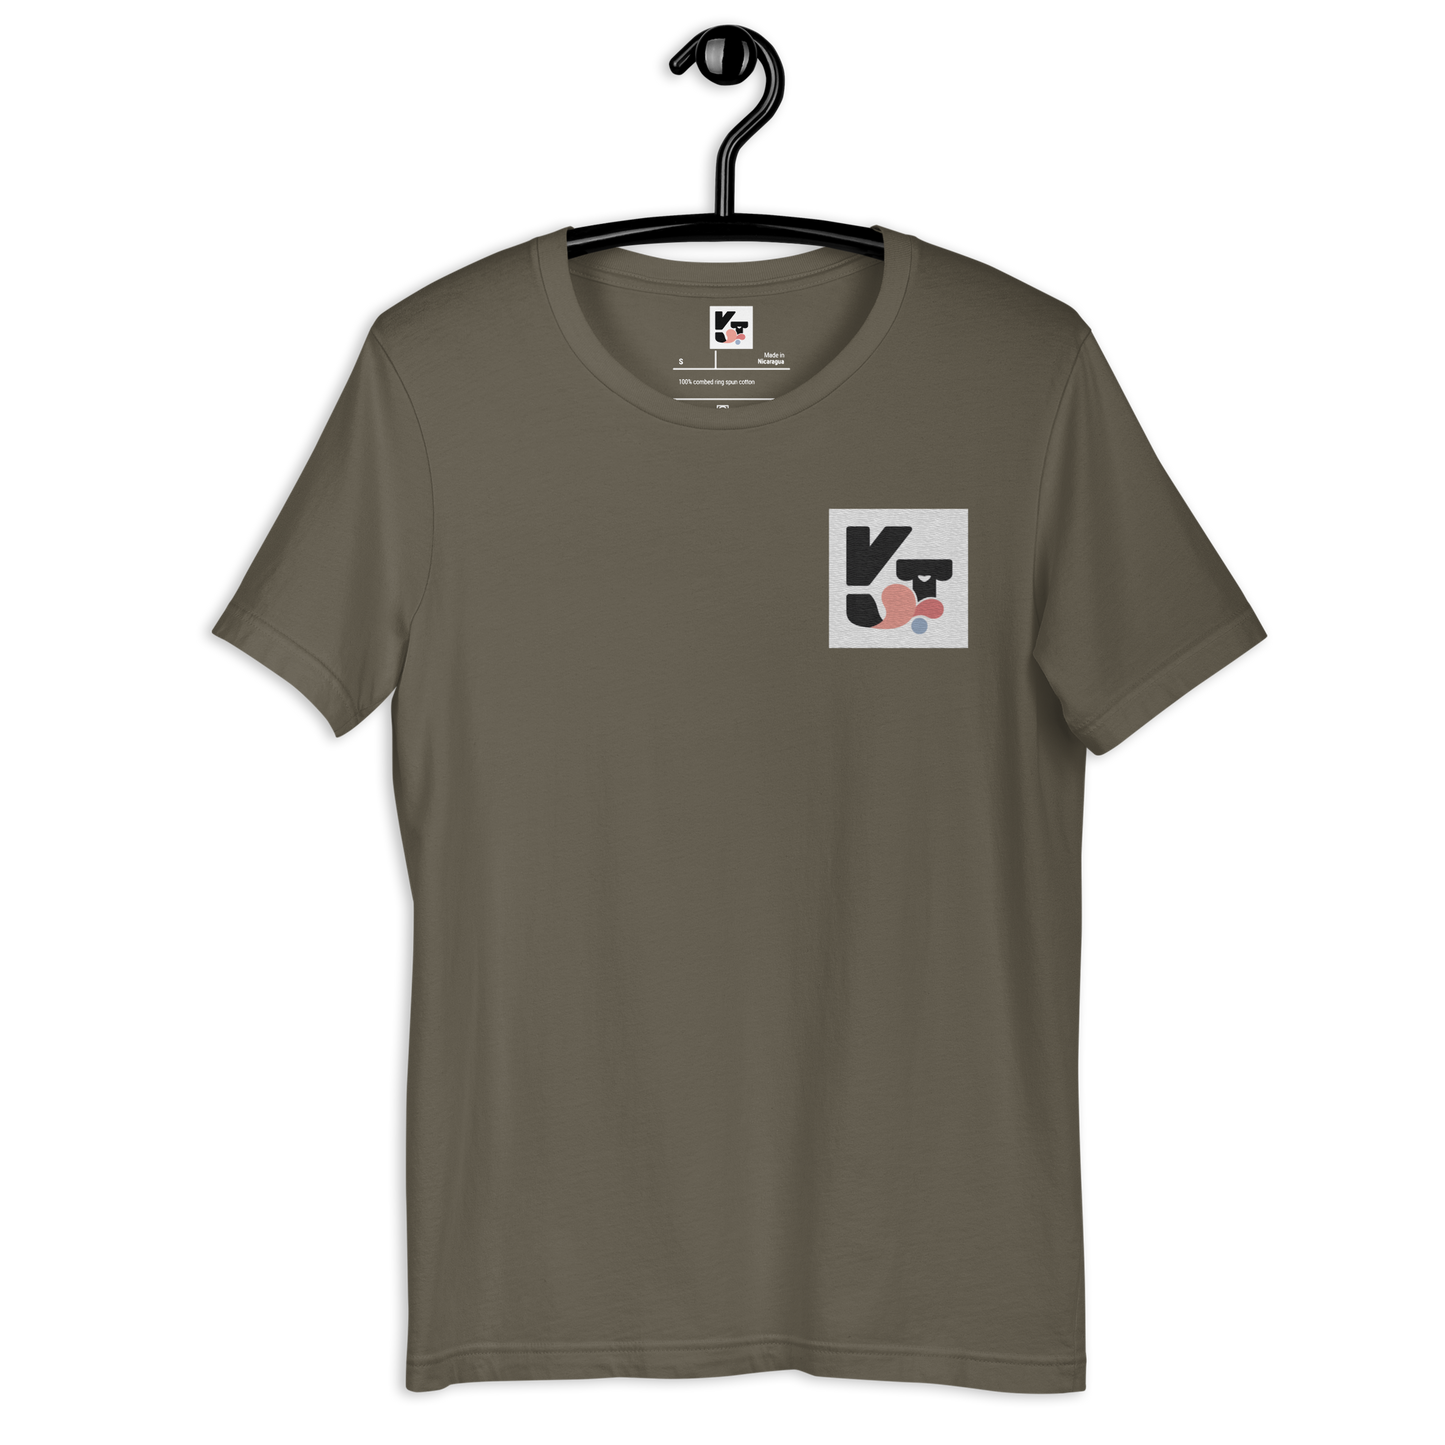 Unisex T-Shirt "Wip Wip Hurray"